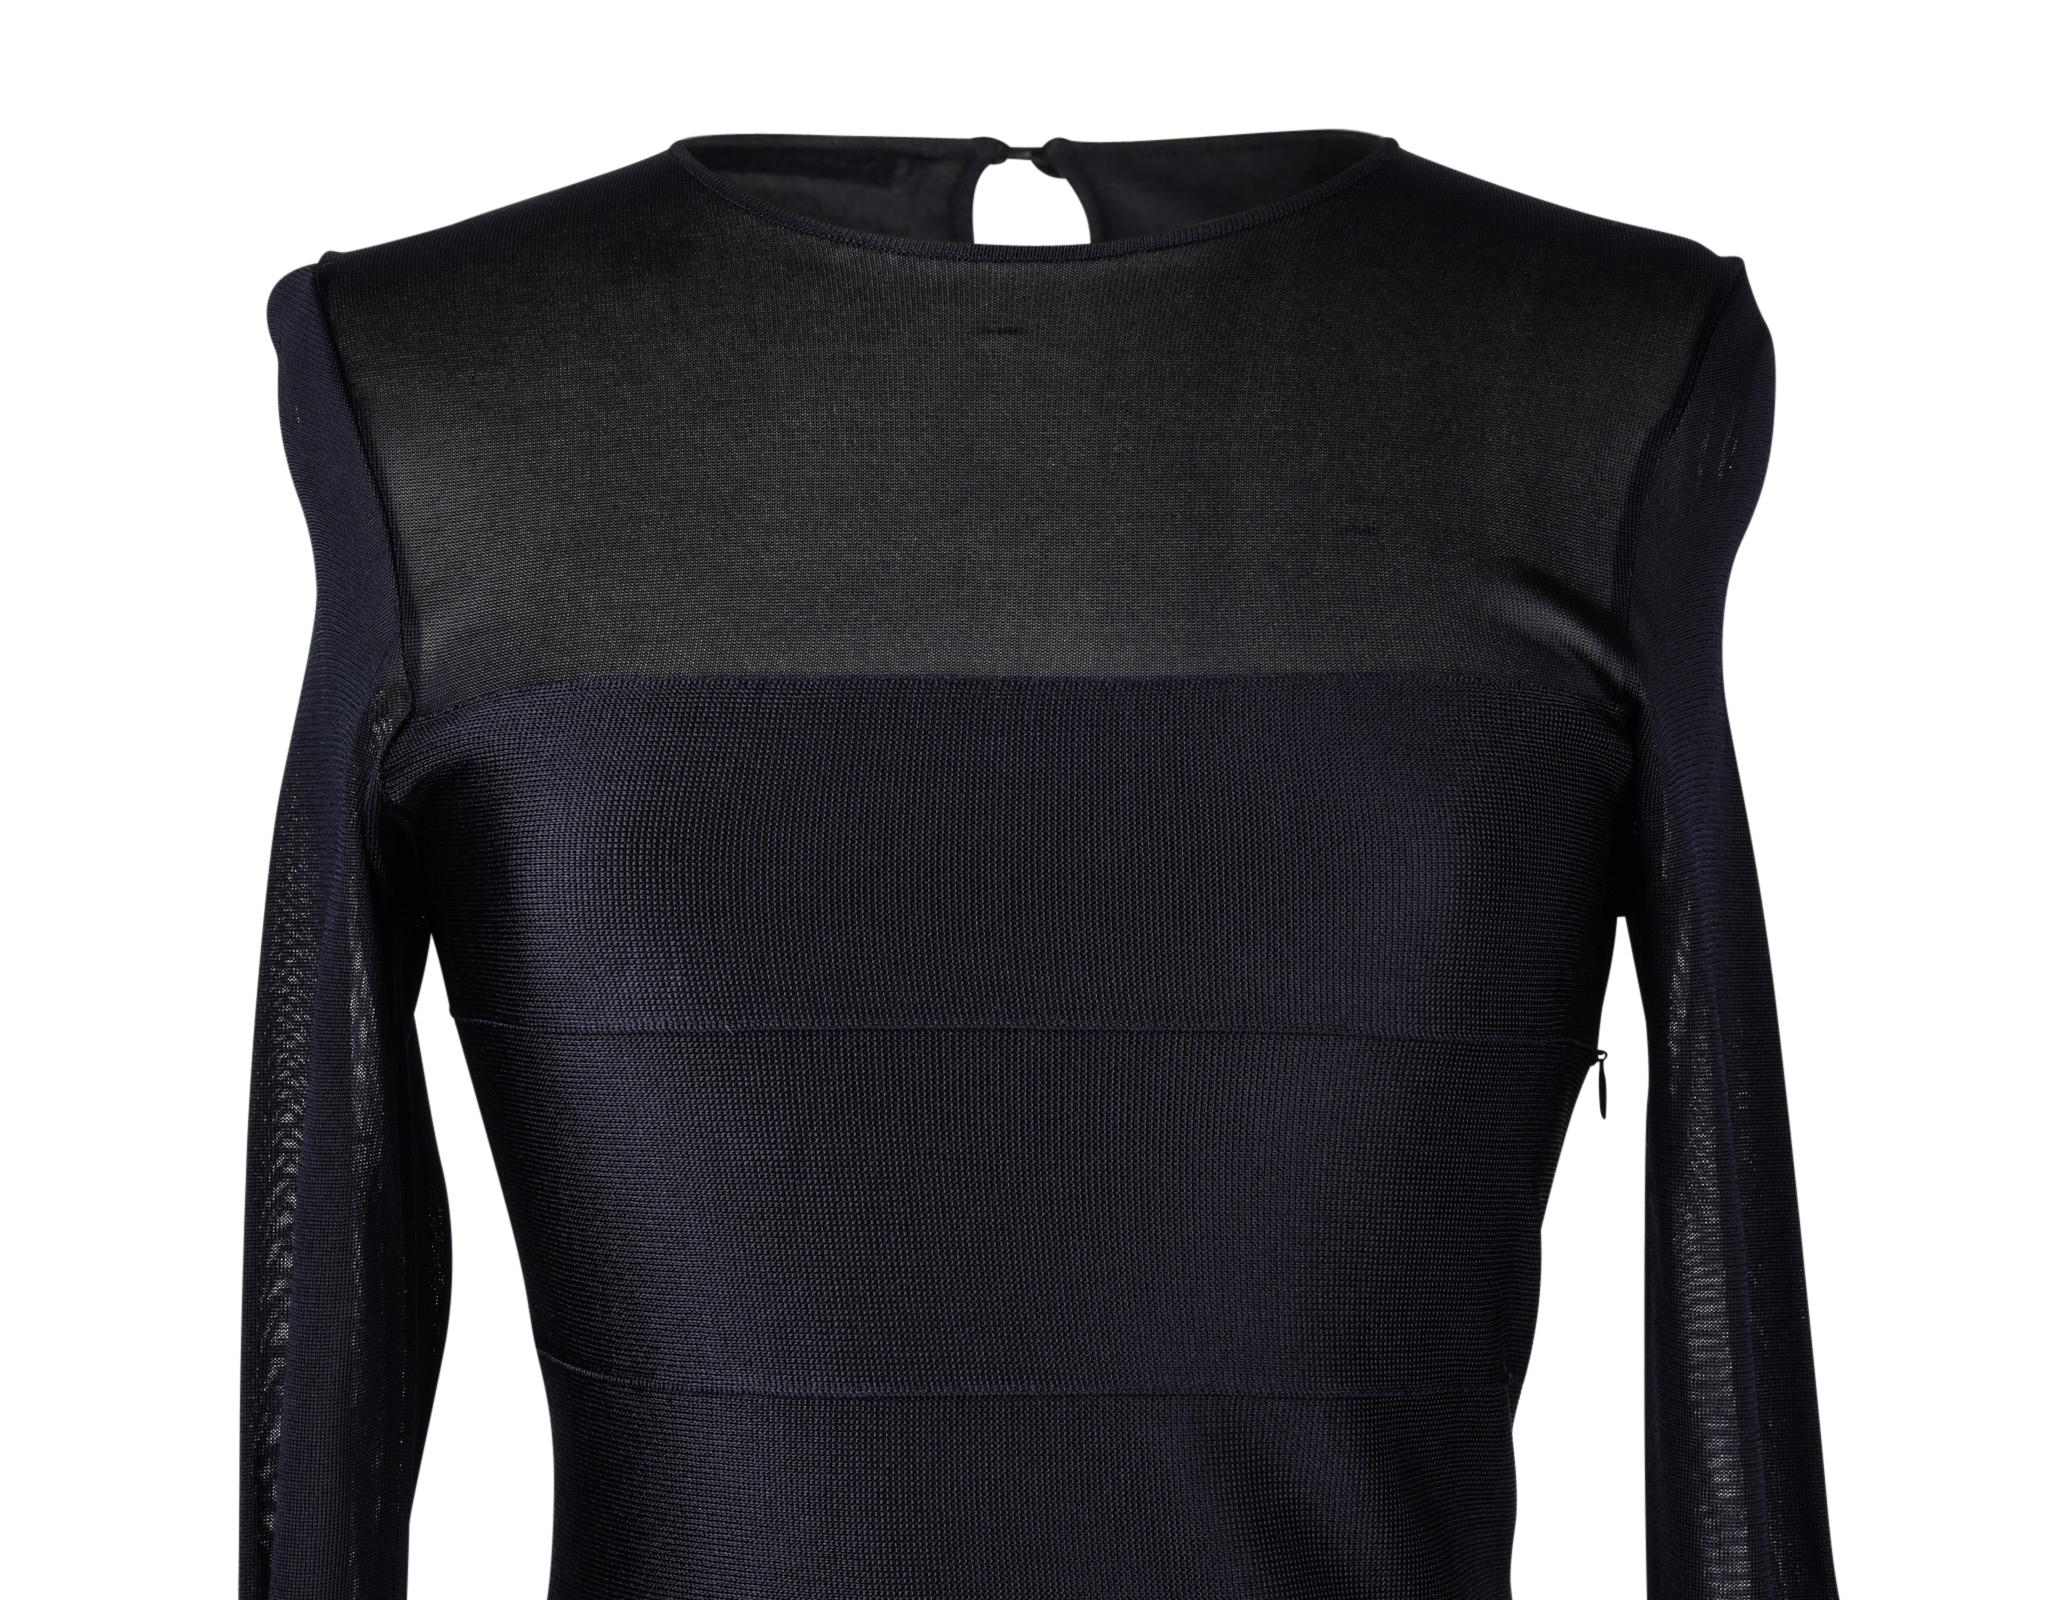 Christian Dior Dress Black Bandage and Mesh 40 / 8 1